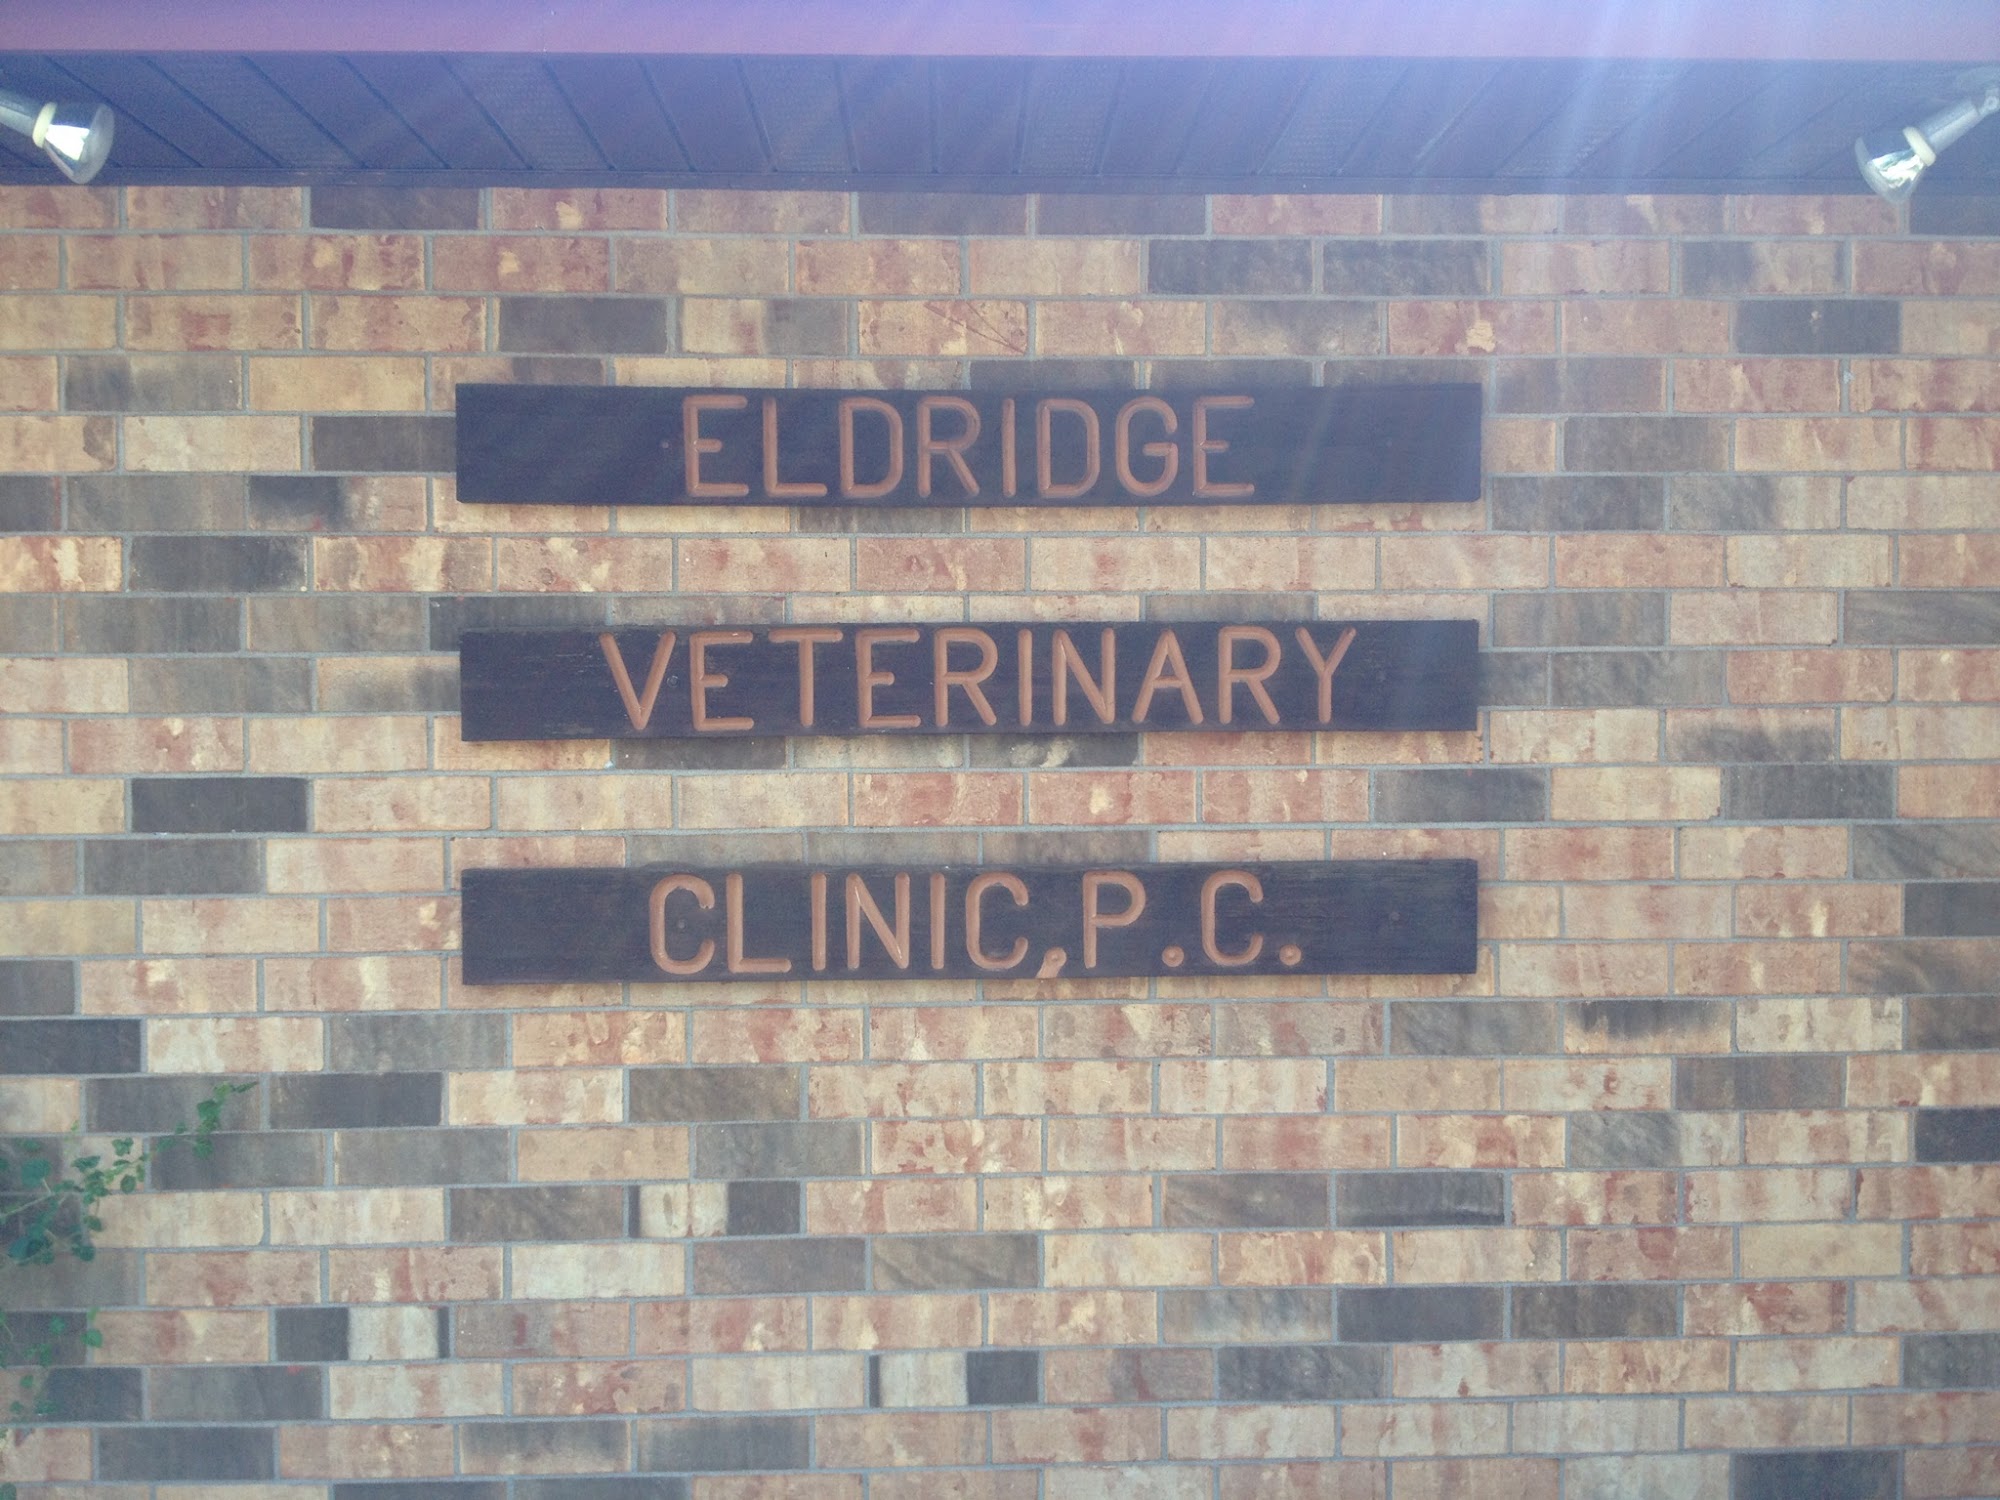 Eldridge Veterinary Clinic P.C.